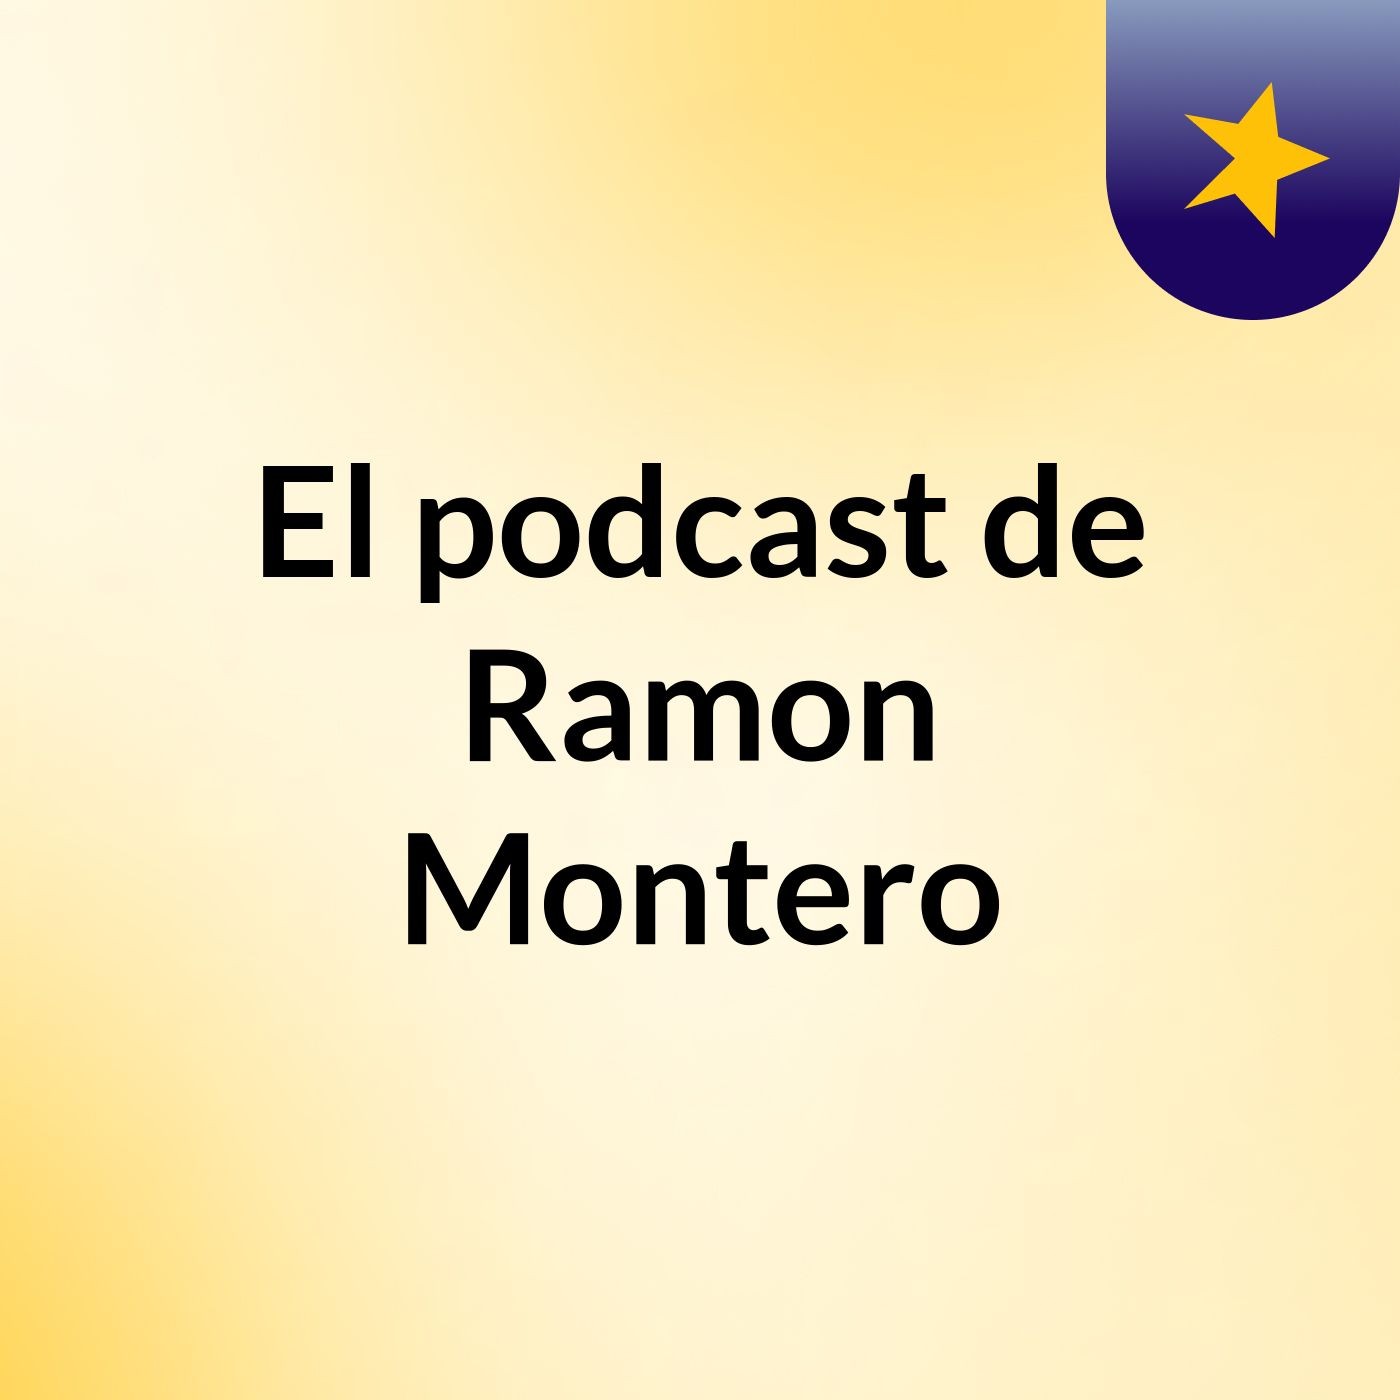 El podcast de Ramon Montero